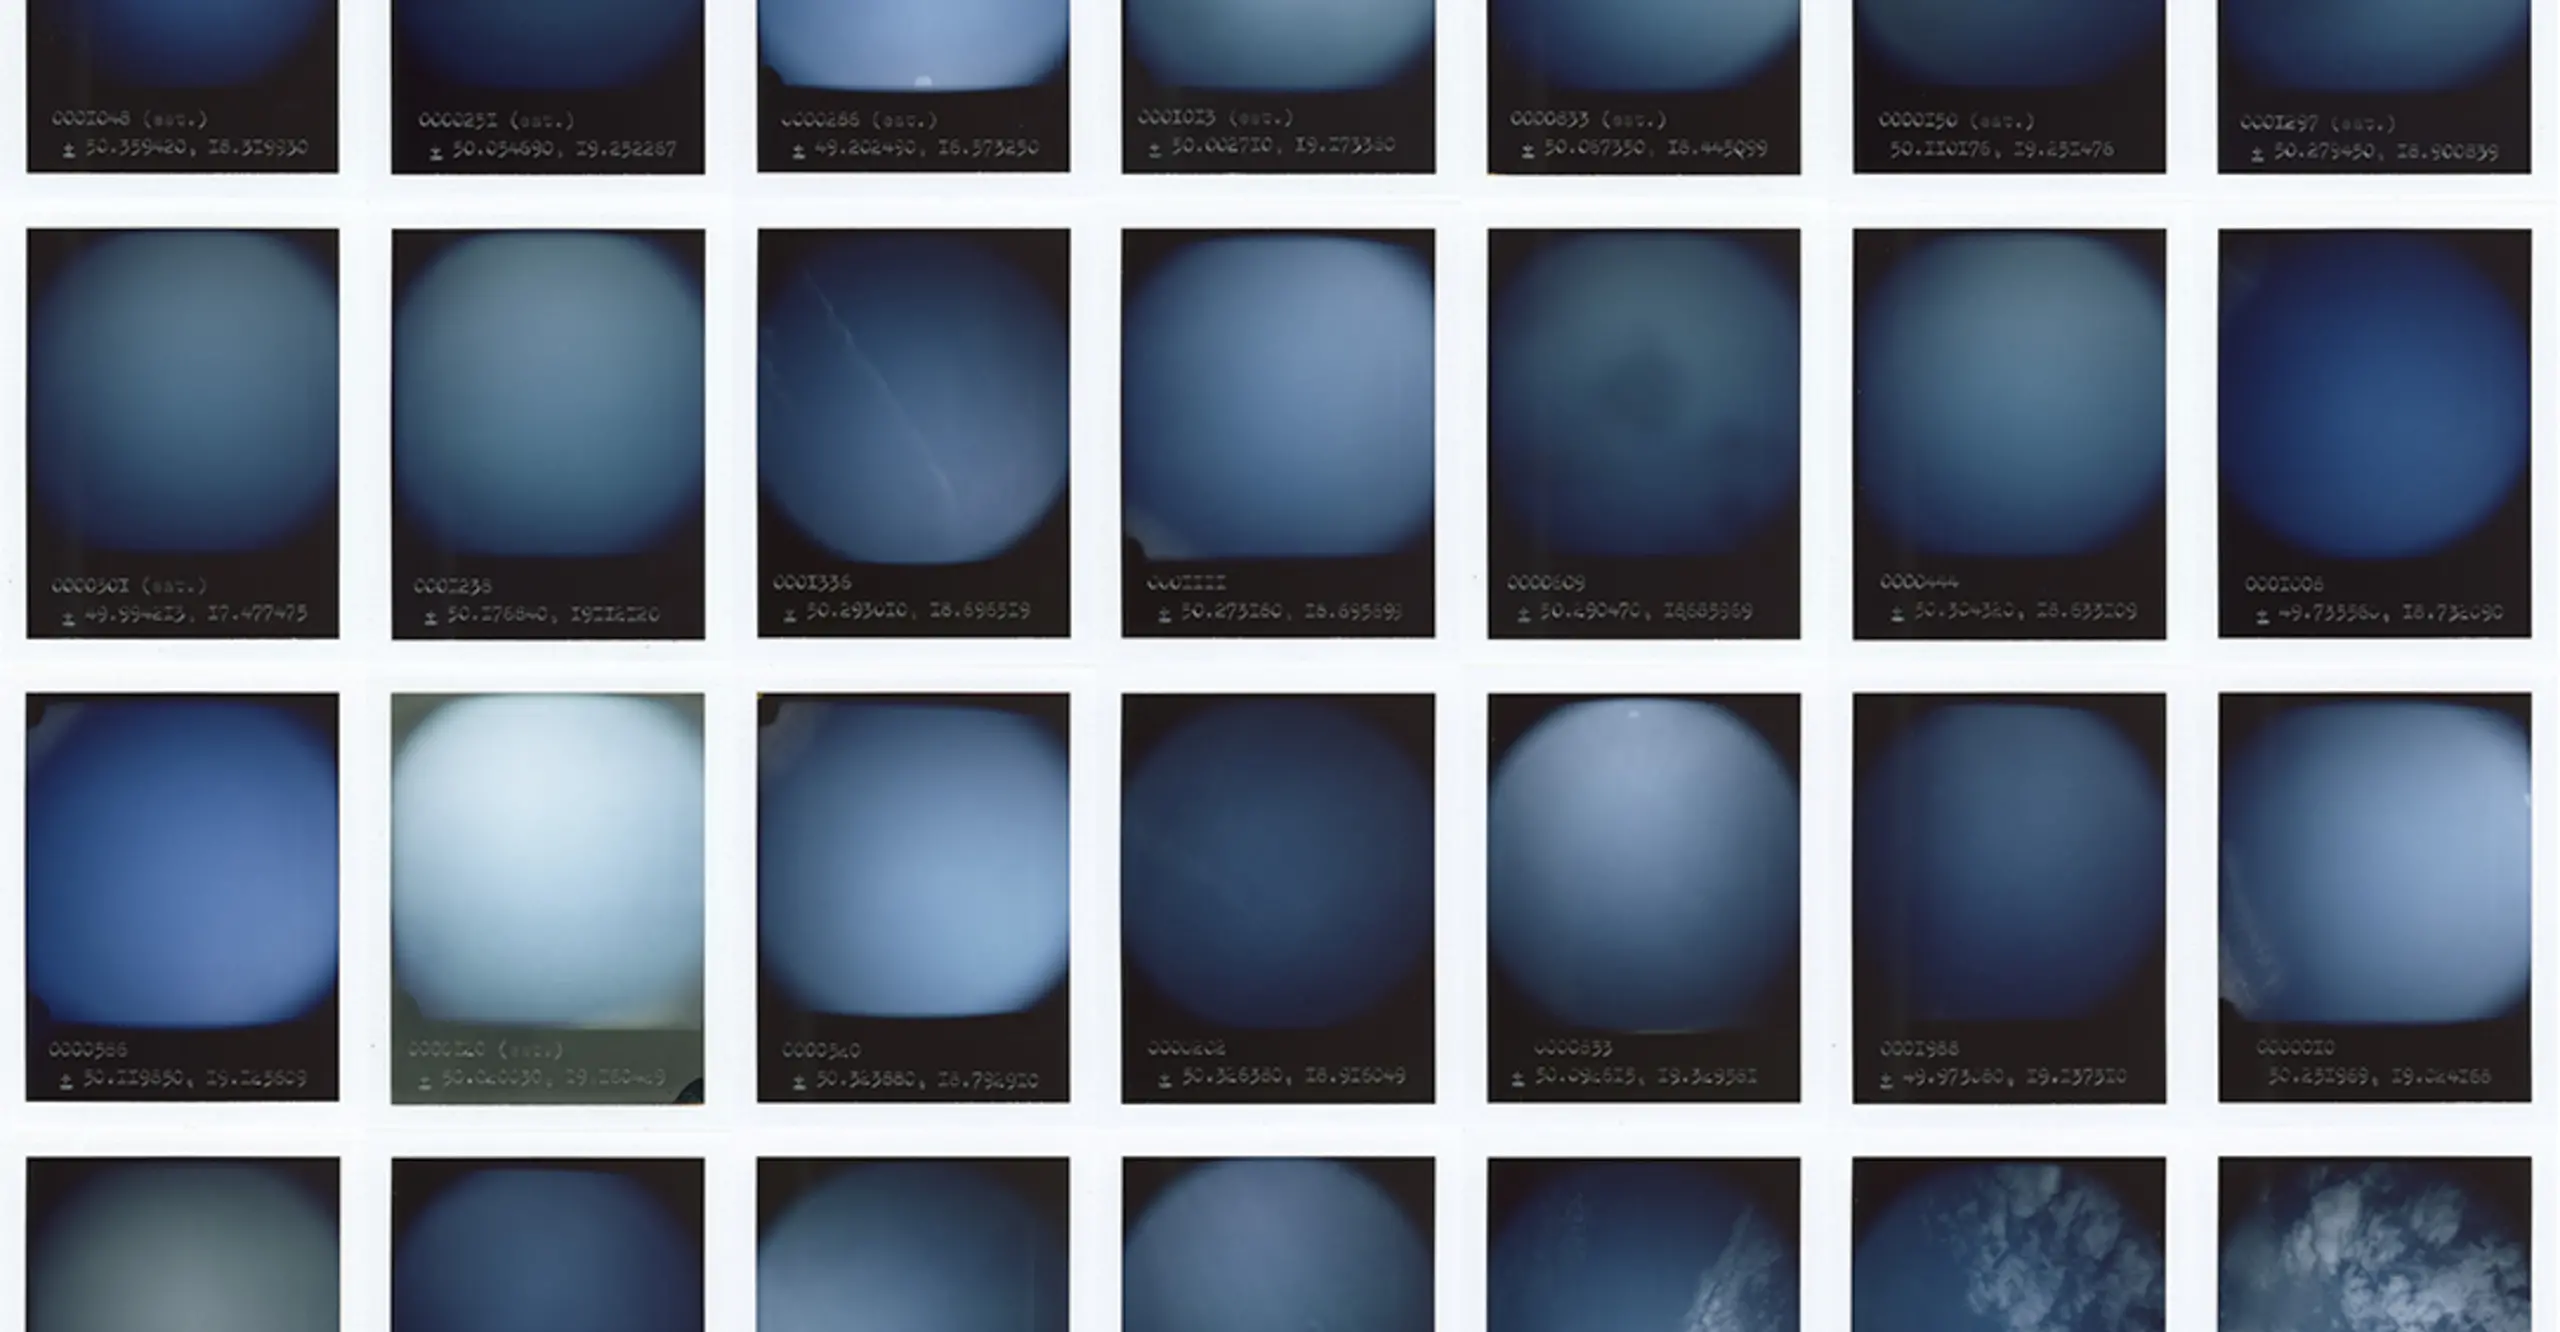 Anton Kusters München-Stadelheim | 0000100 (est.) | 48.100152, 11.592046 (EX) from The Blue Skies Project © Anton Kusters